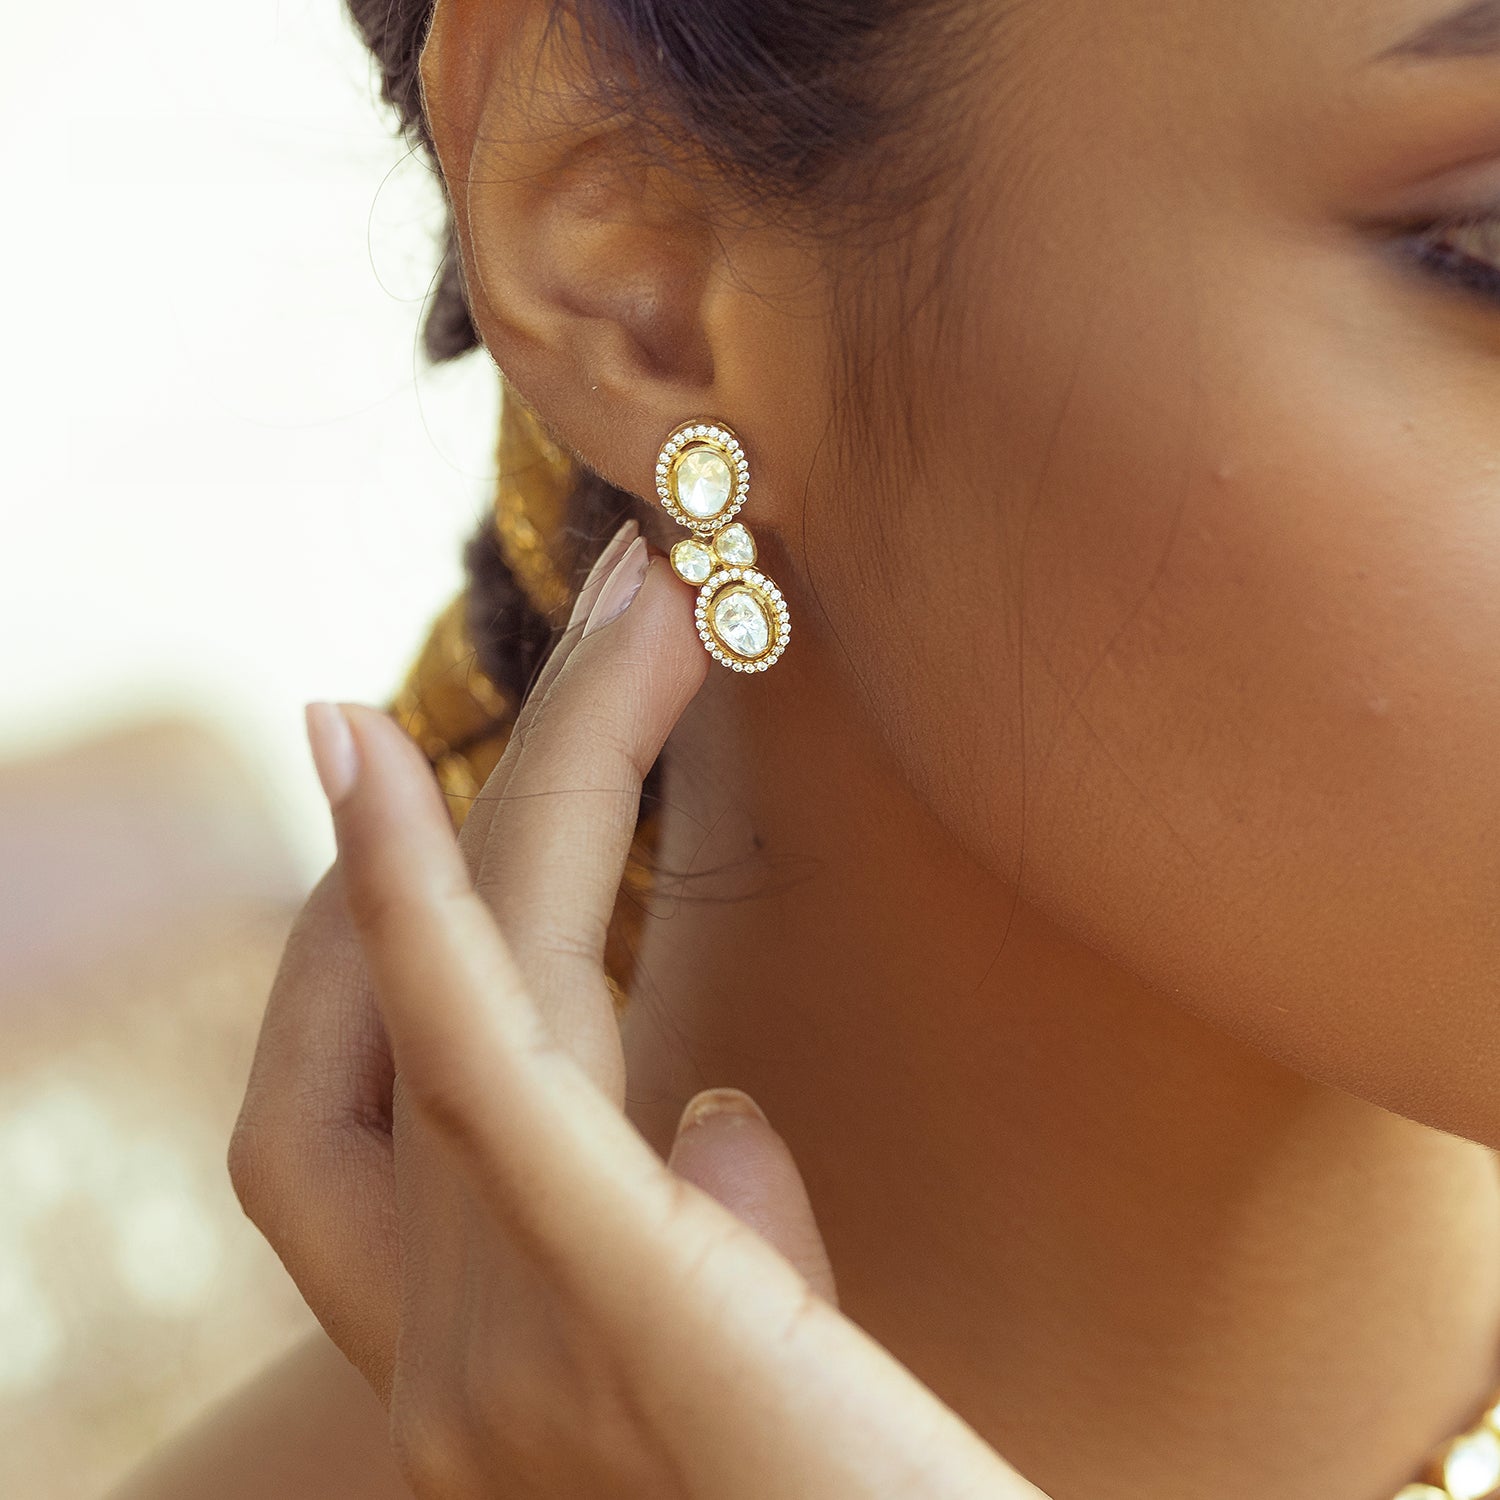 Dhensri earrings